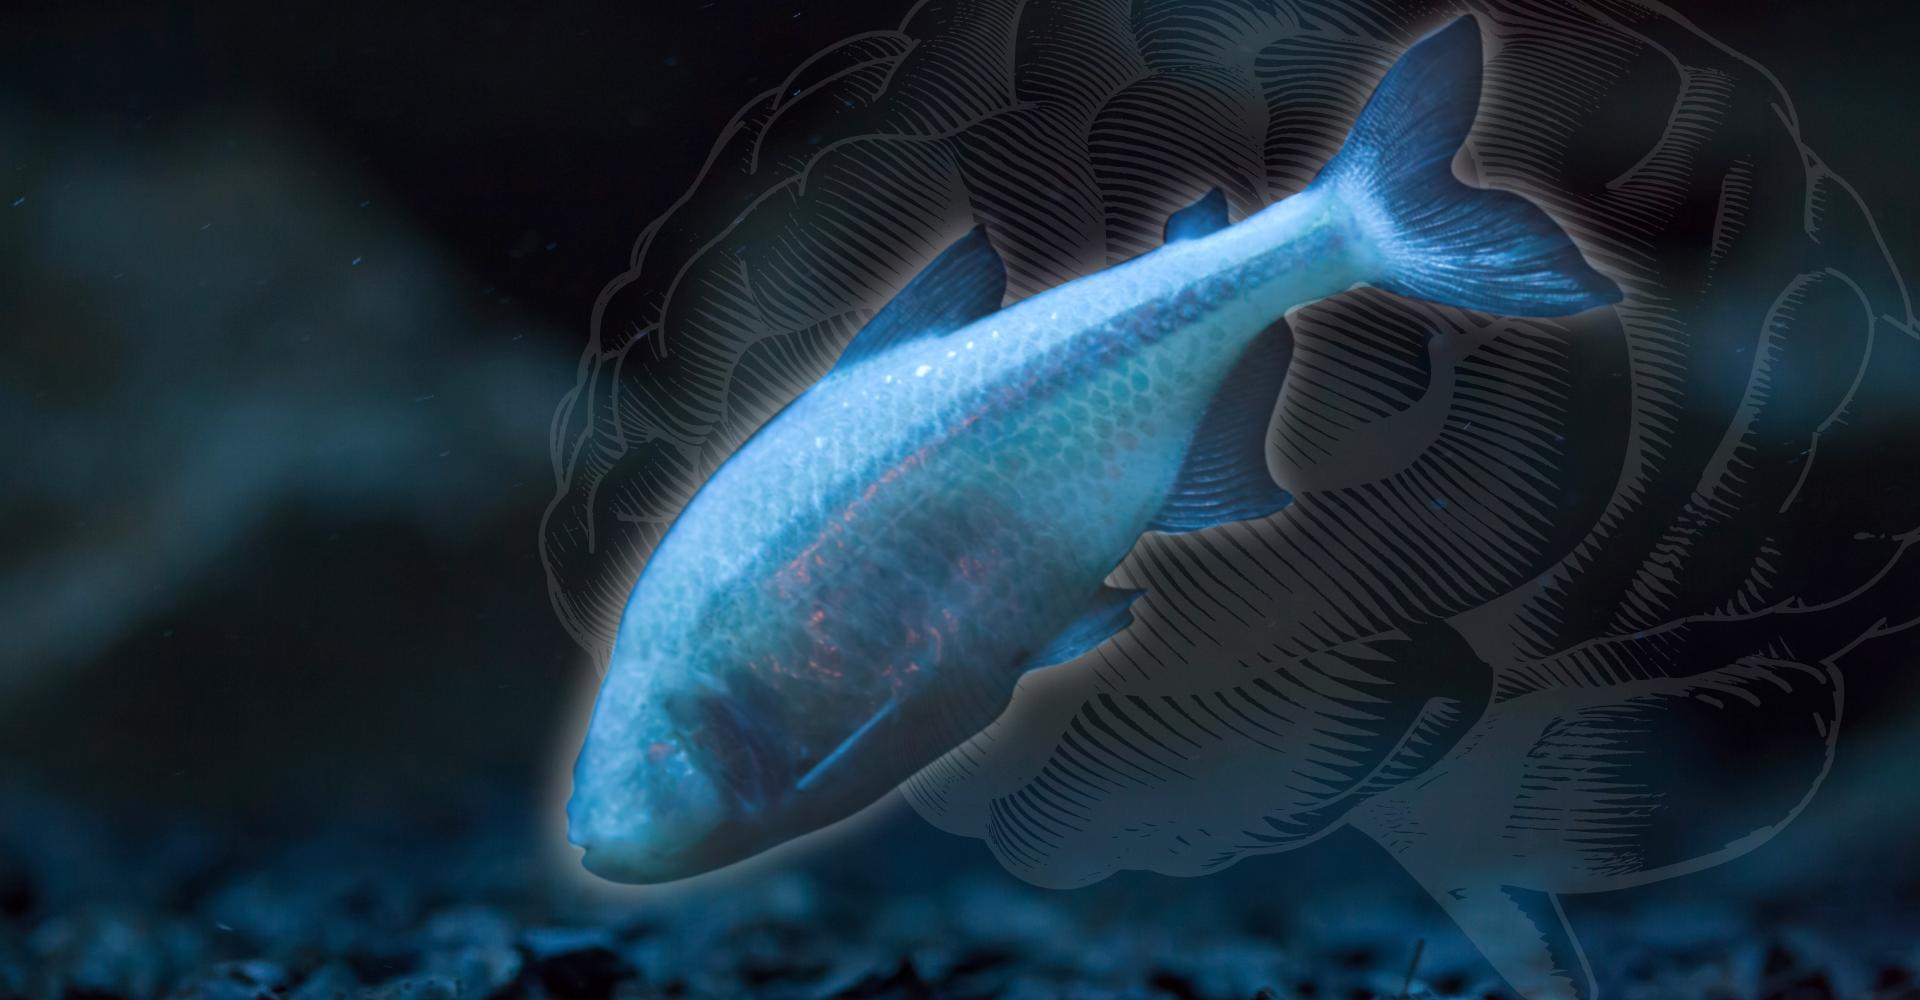 Illuminating the Mysteries of the Cavefish Brain